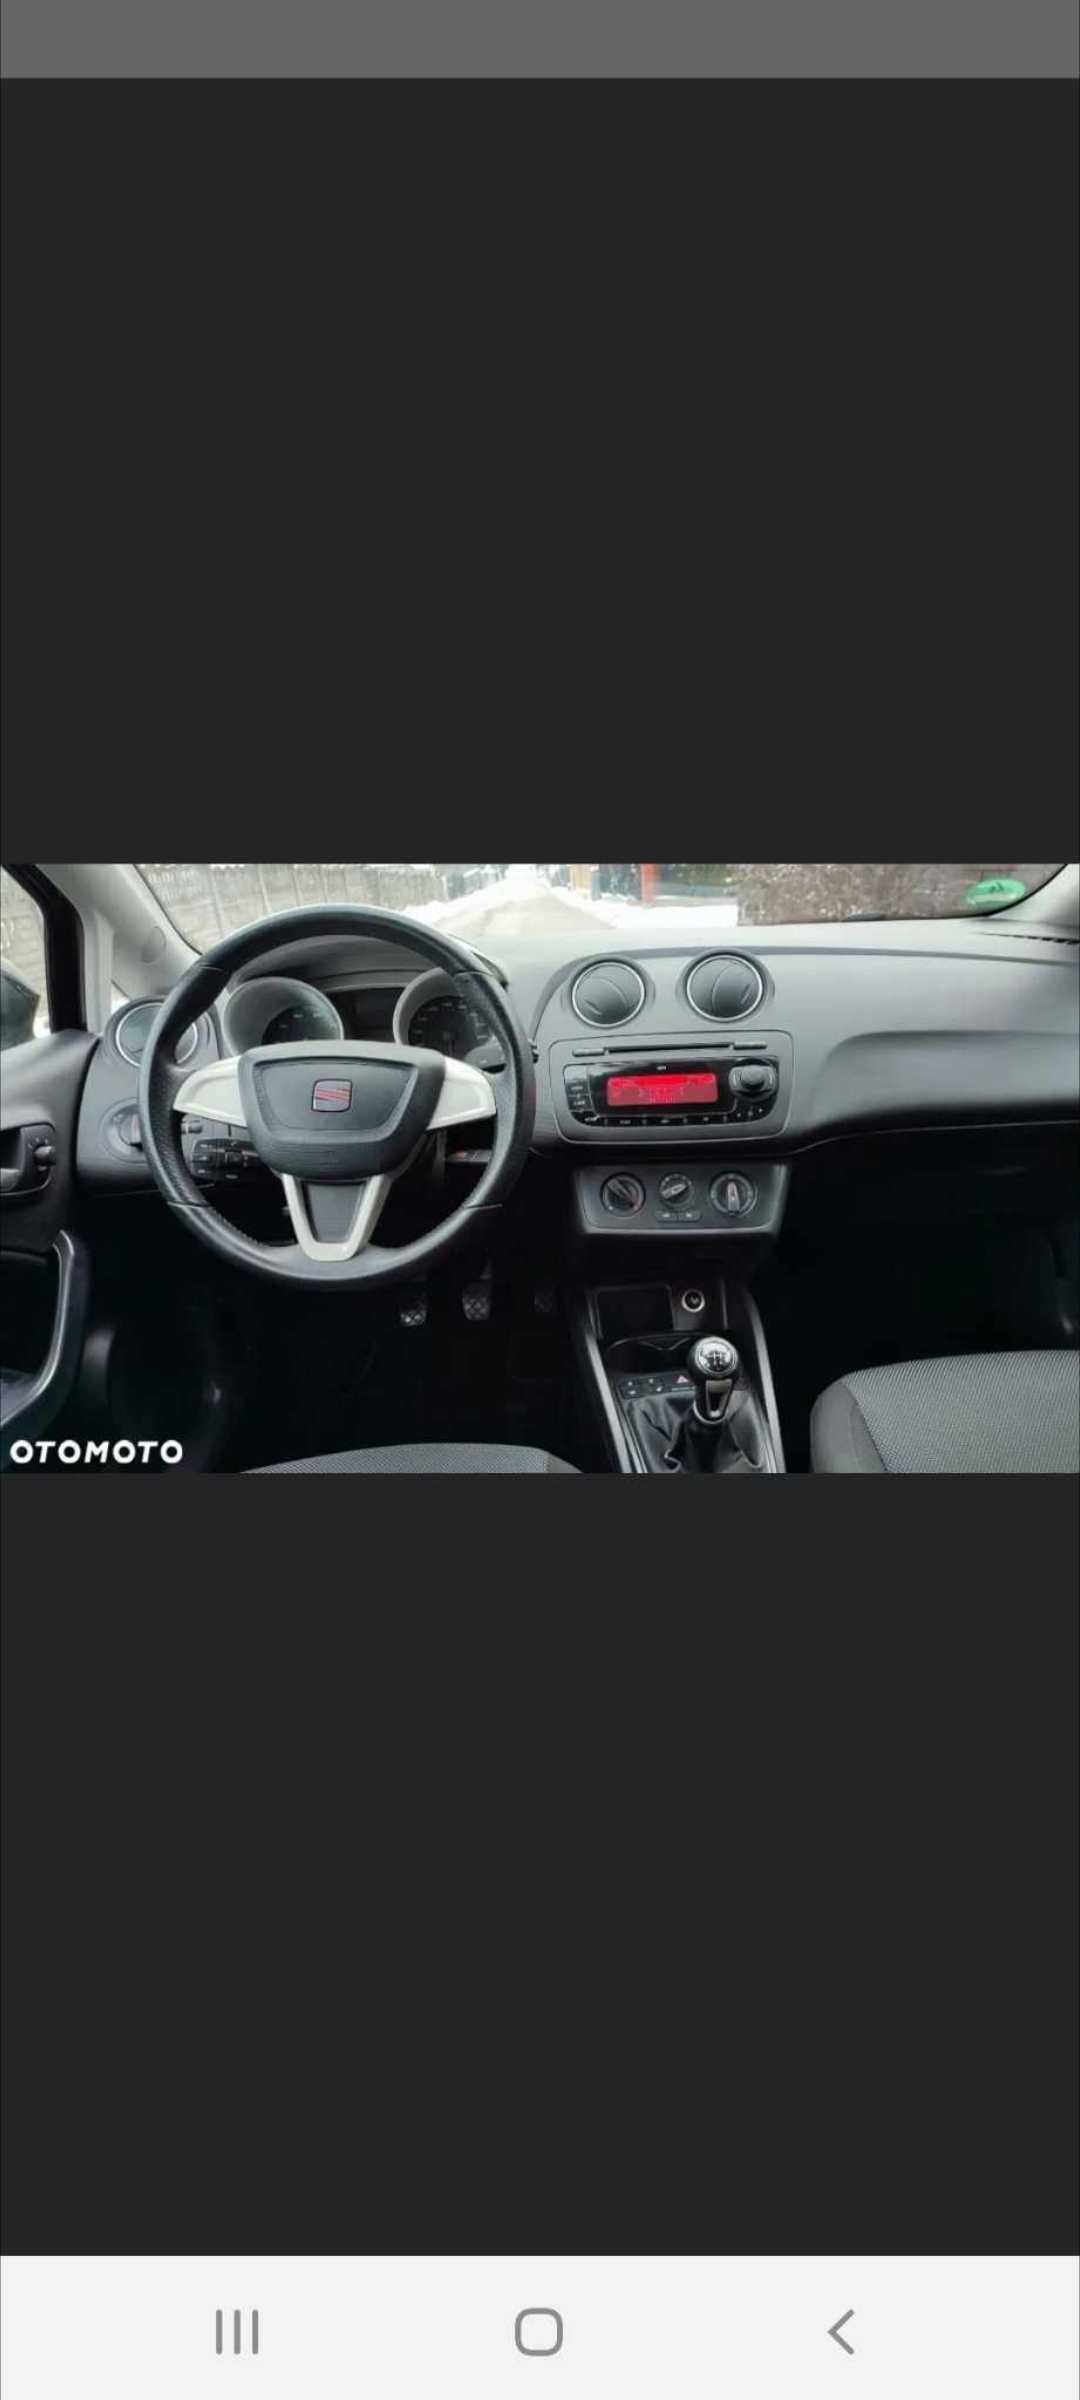 Seat Ibiza 4,2009 rok,silnik 1.6